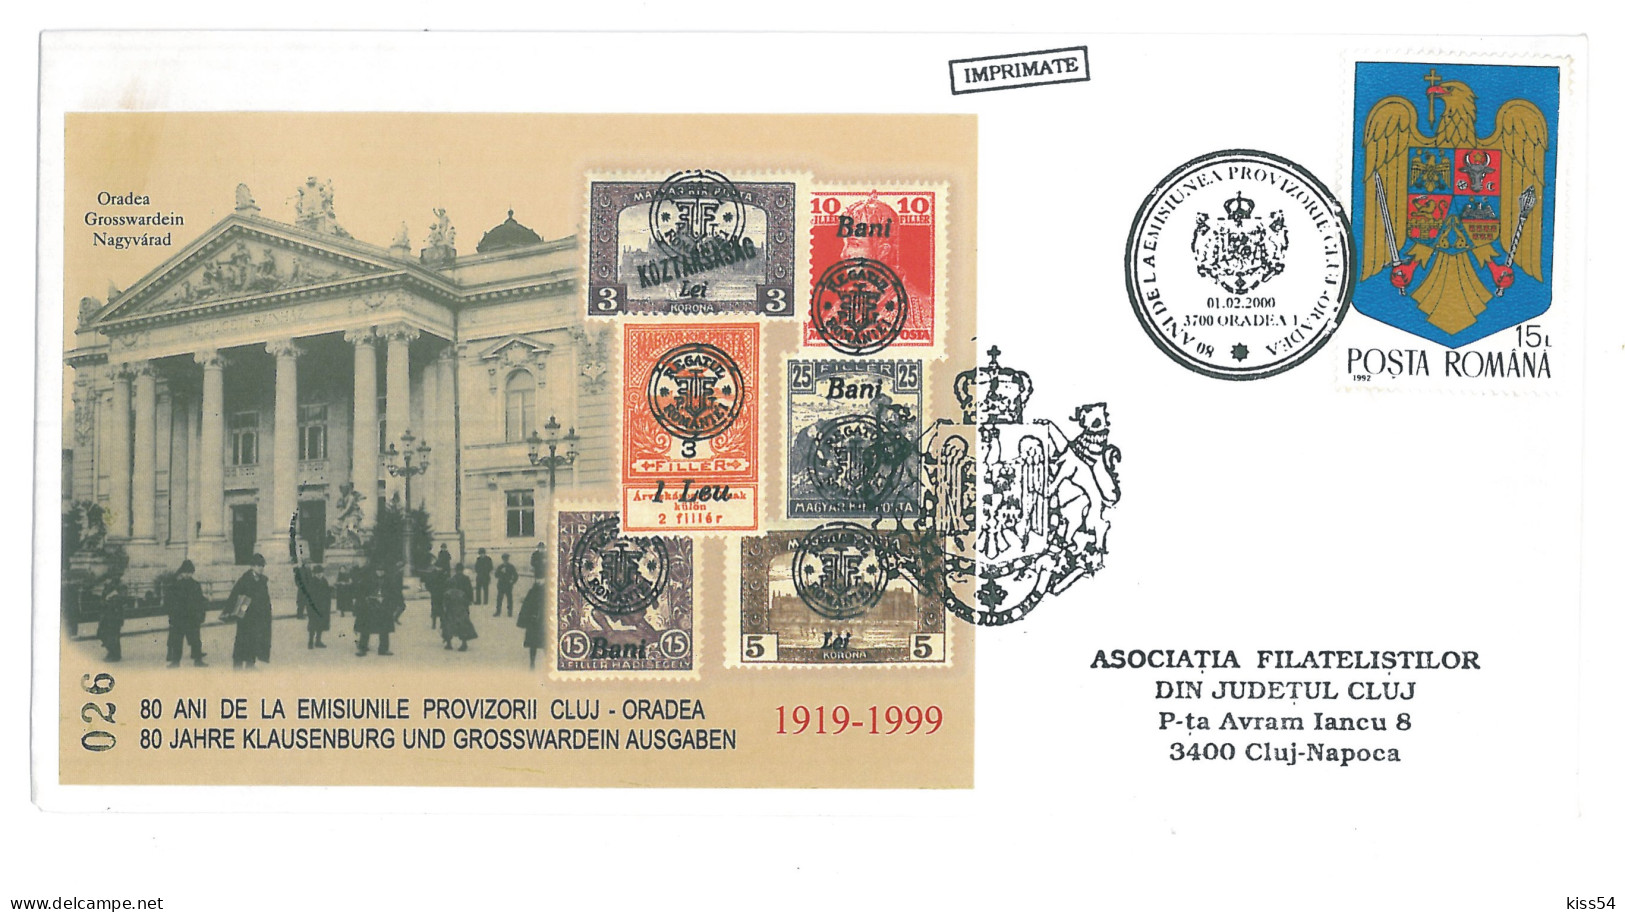 COV 91 - 3030 80 Years Since The Cluj-Oradea Philatelic Edition, Romania - Cover - Used - 2000 - Paketmarken